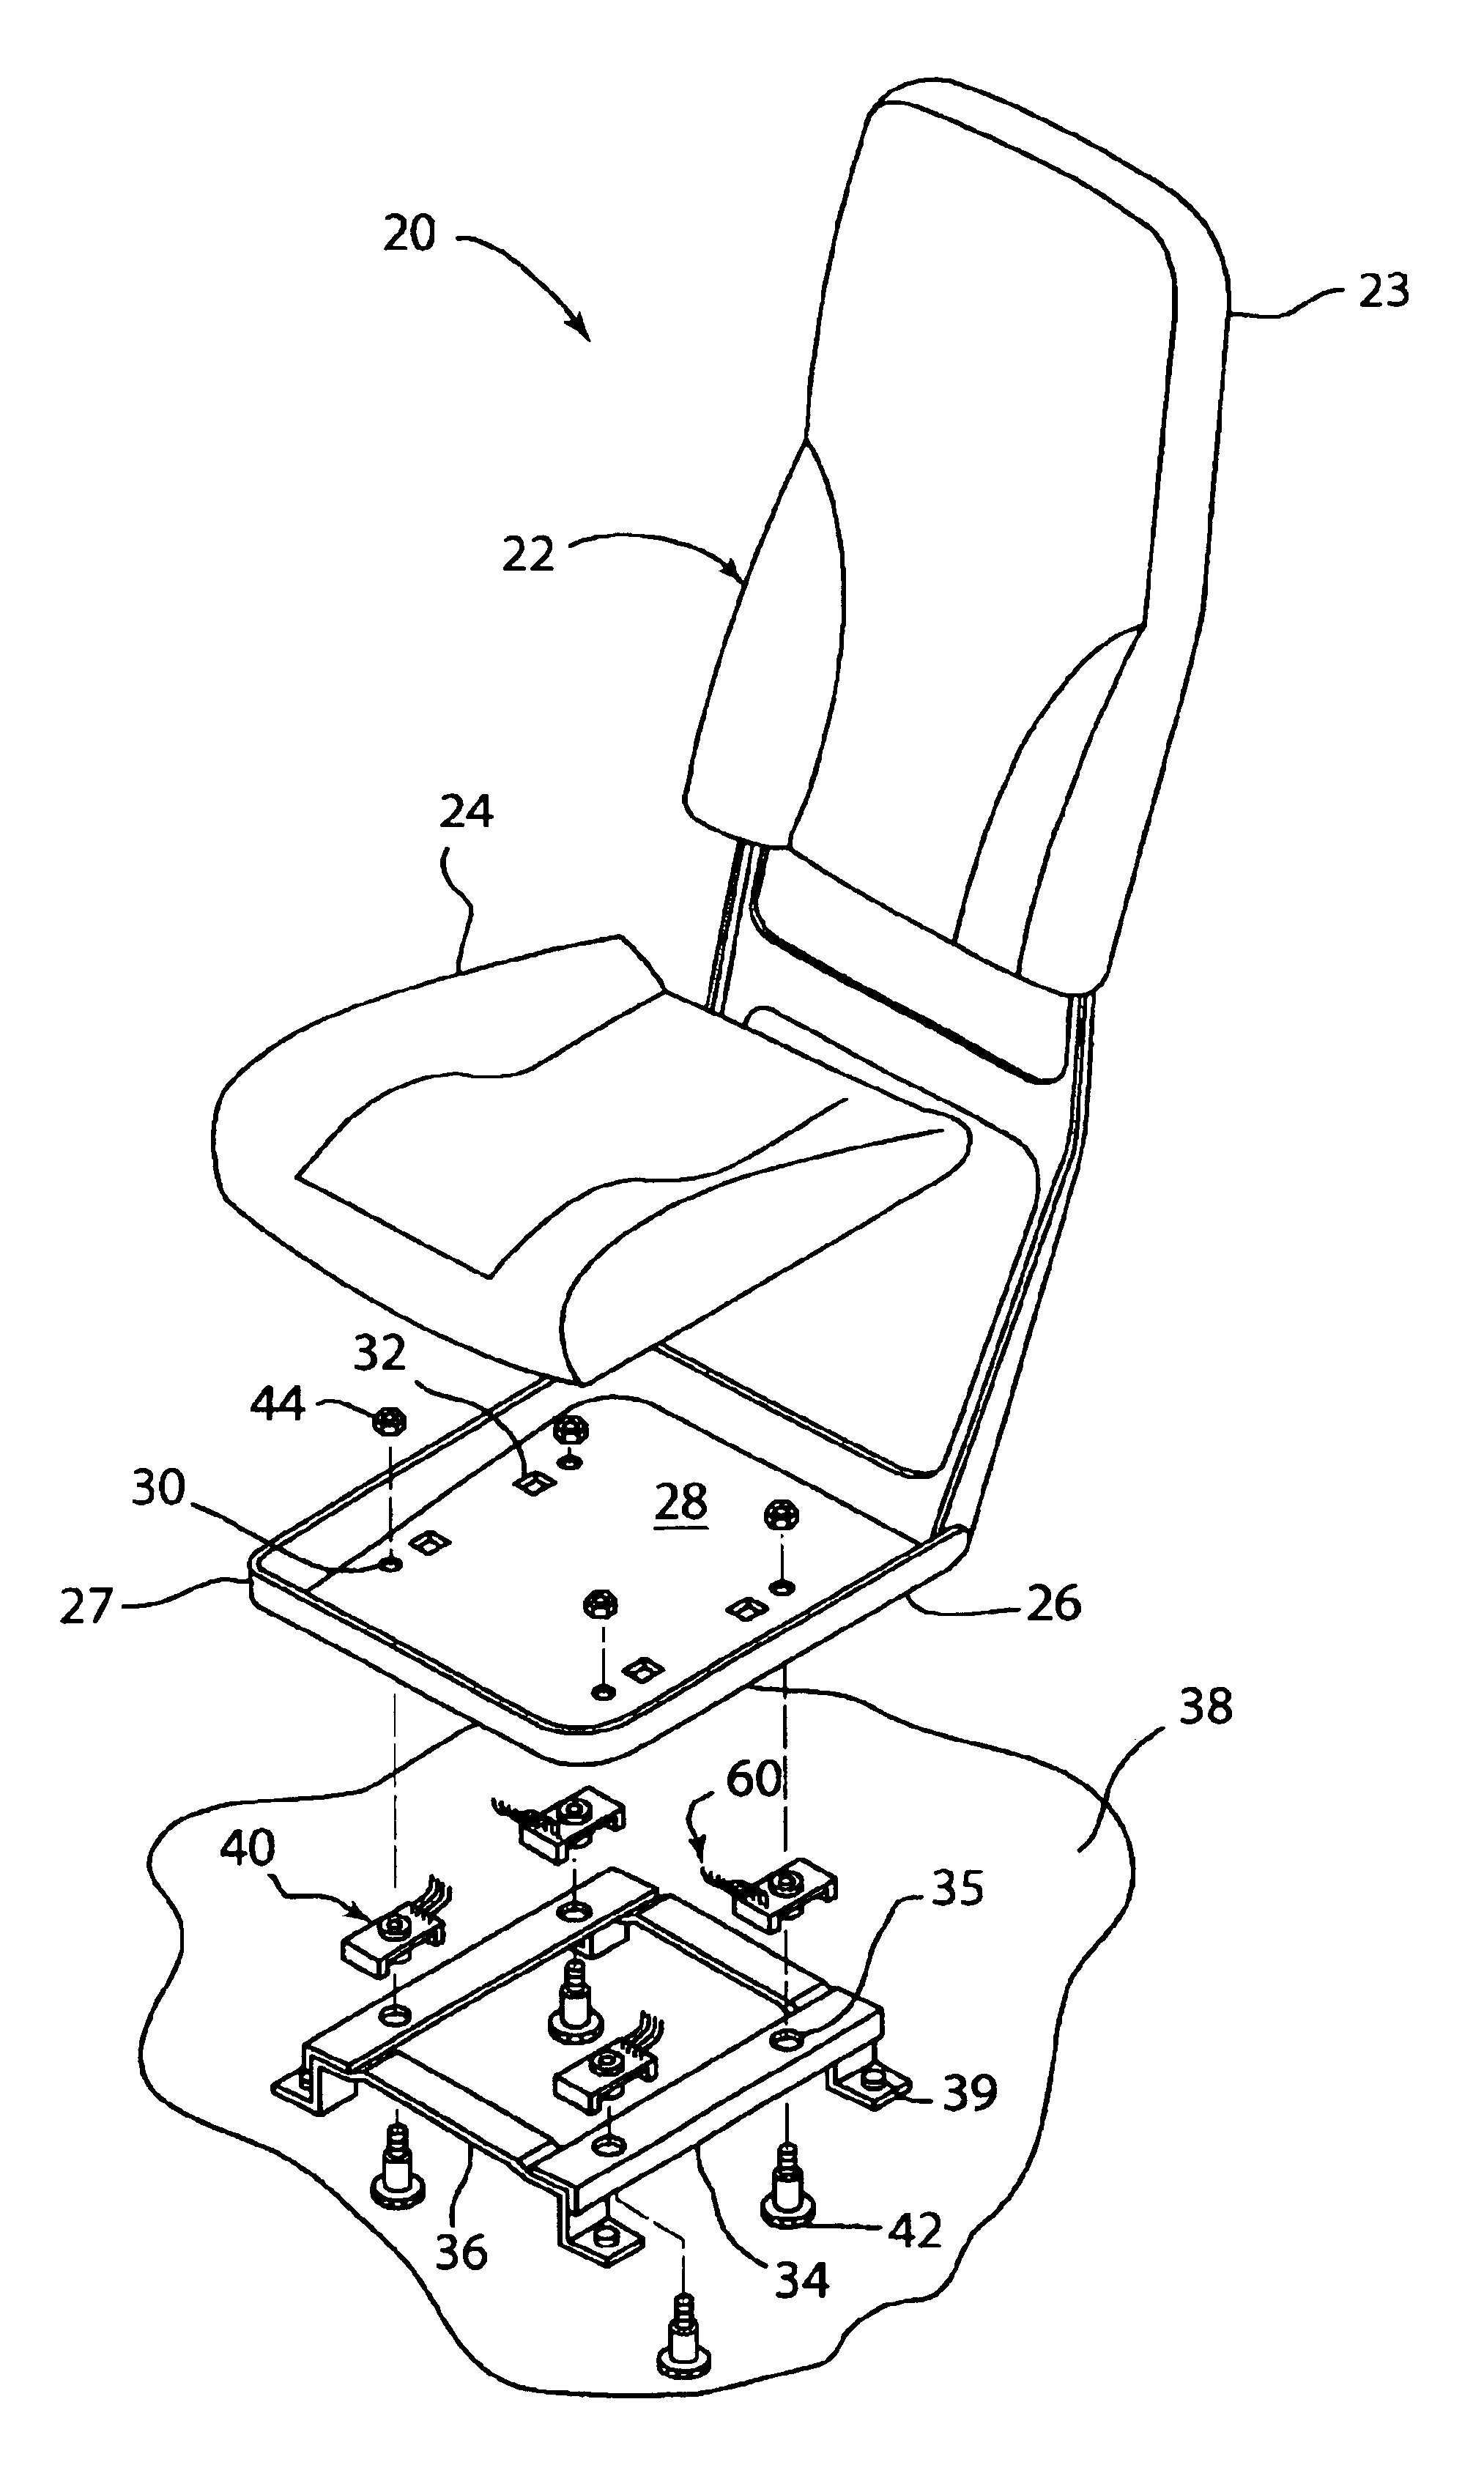 Vehicle seat weight sensor